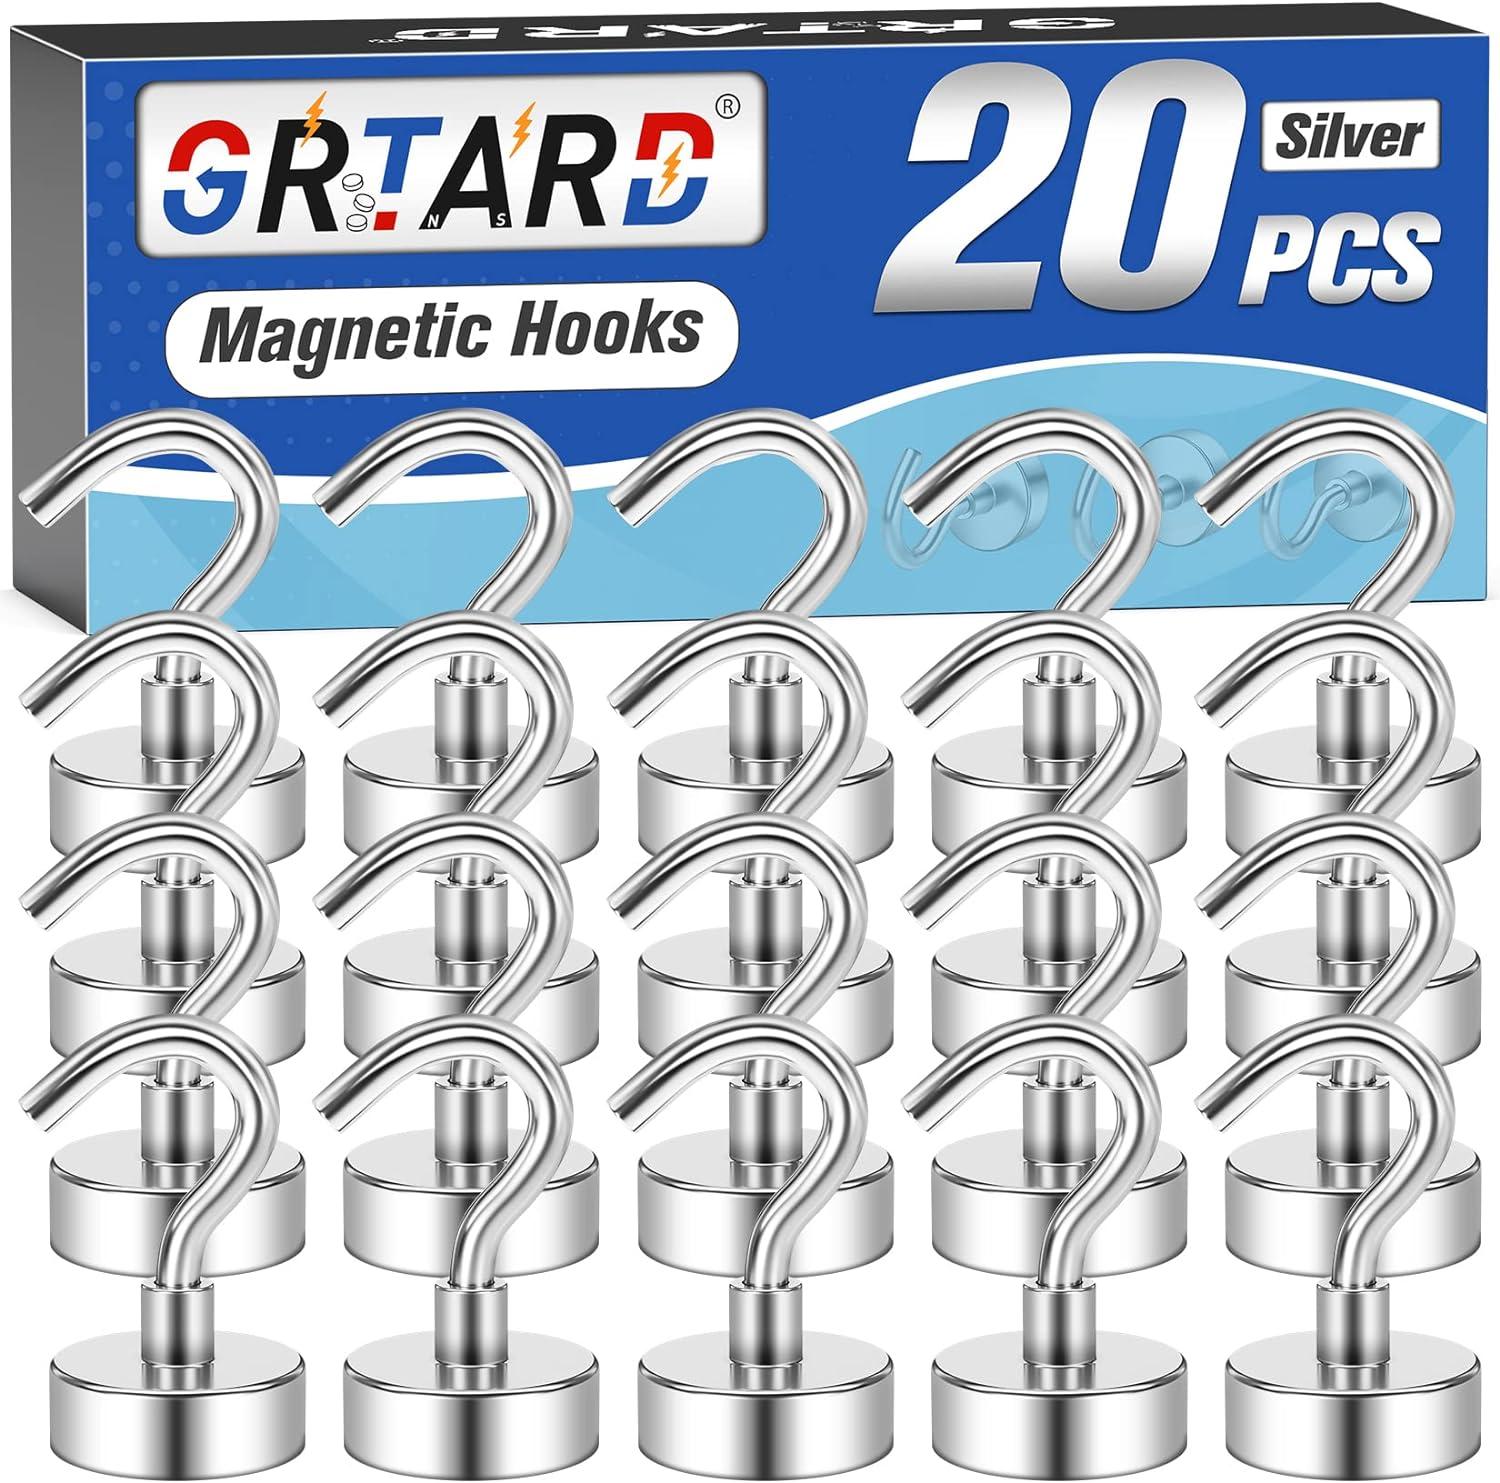 grtard magnetic hooks heavy duty neodymium magnet hooks strong magnetic hooks for hanging magnets with hooks 